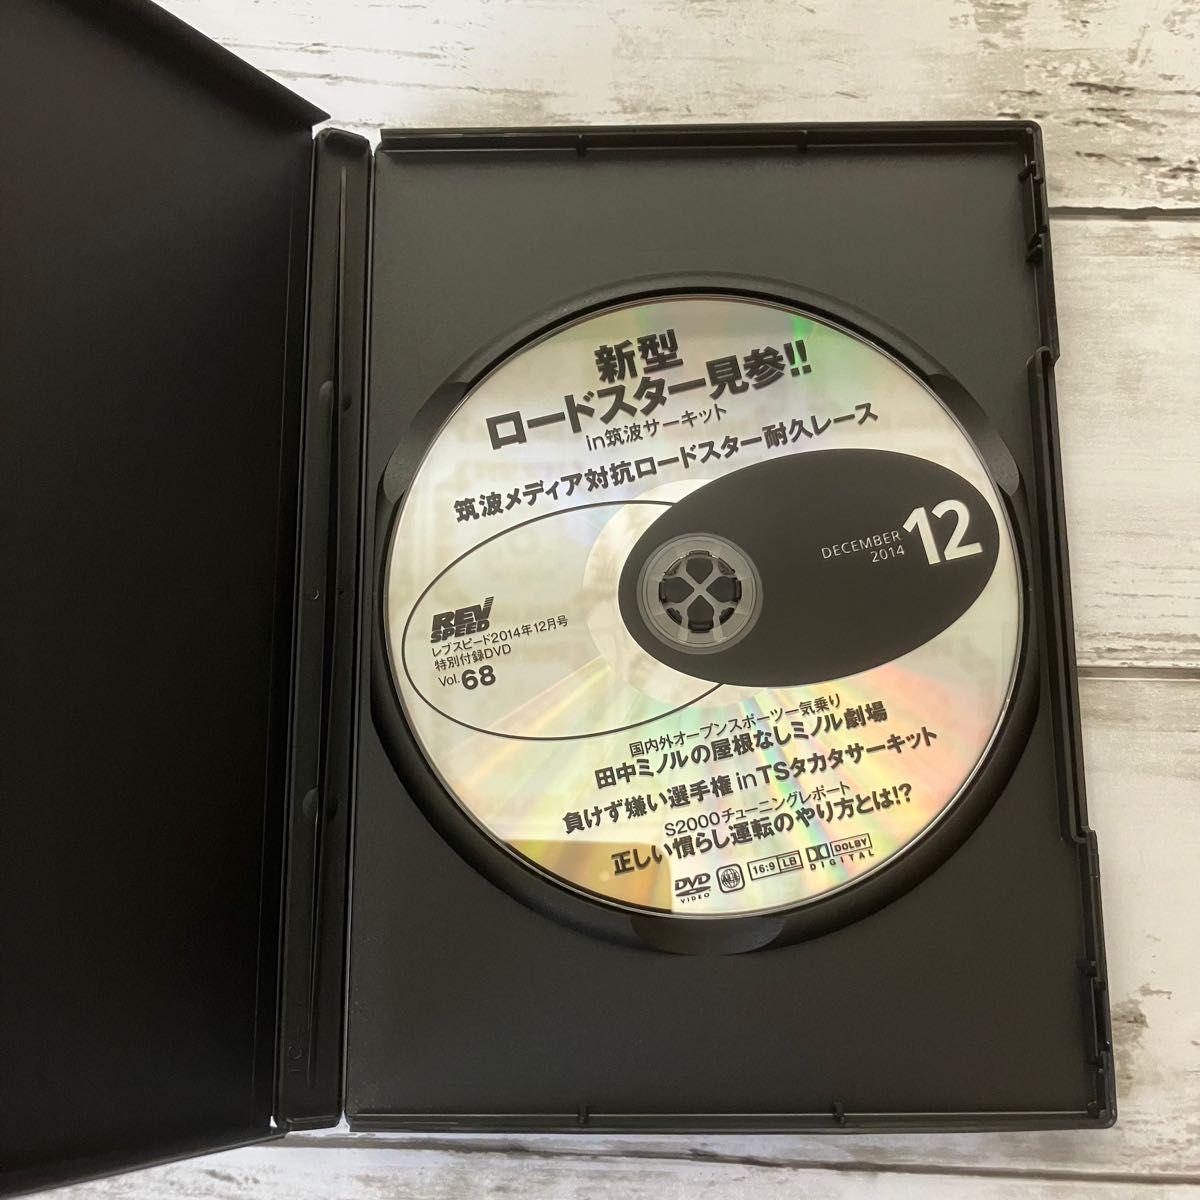 美品】HondaStyle REV SPEED DVD SPECIAL 特別付録 織戸学谷口信輝 DVD3枚セット 